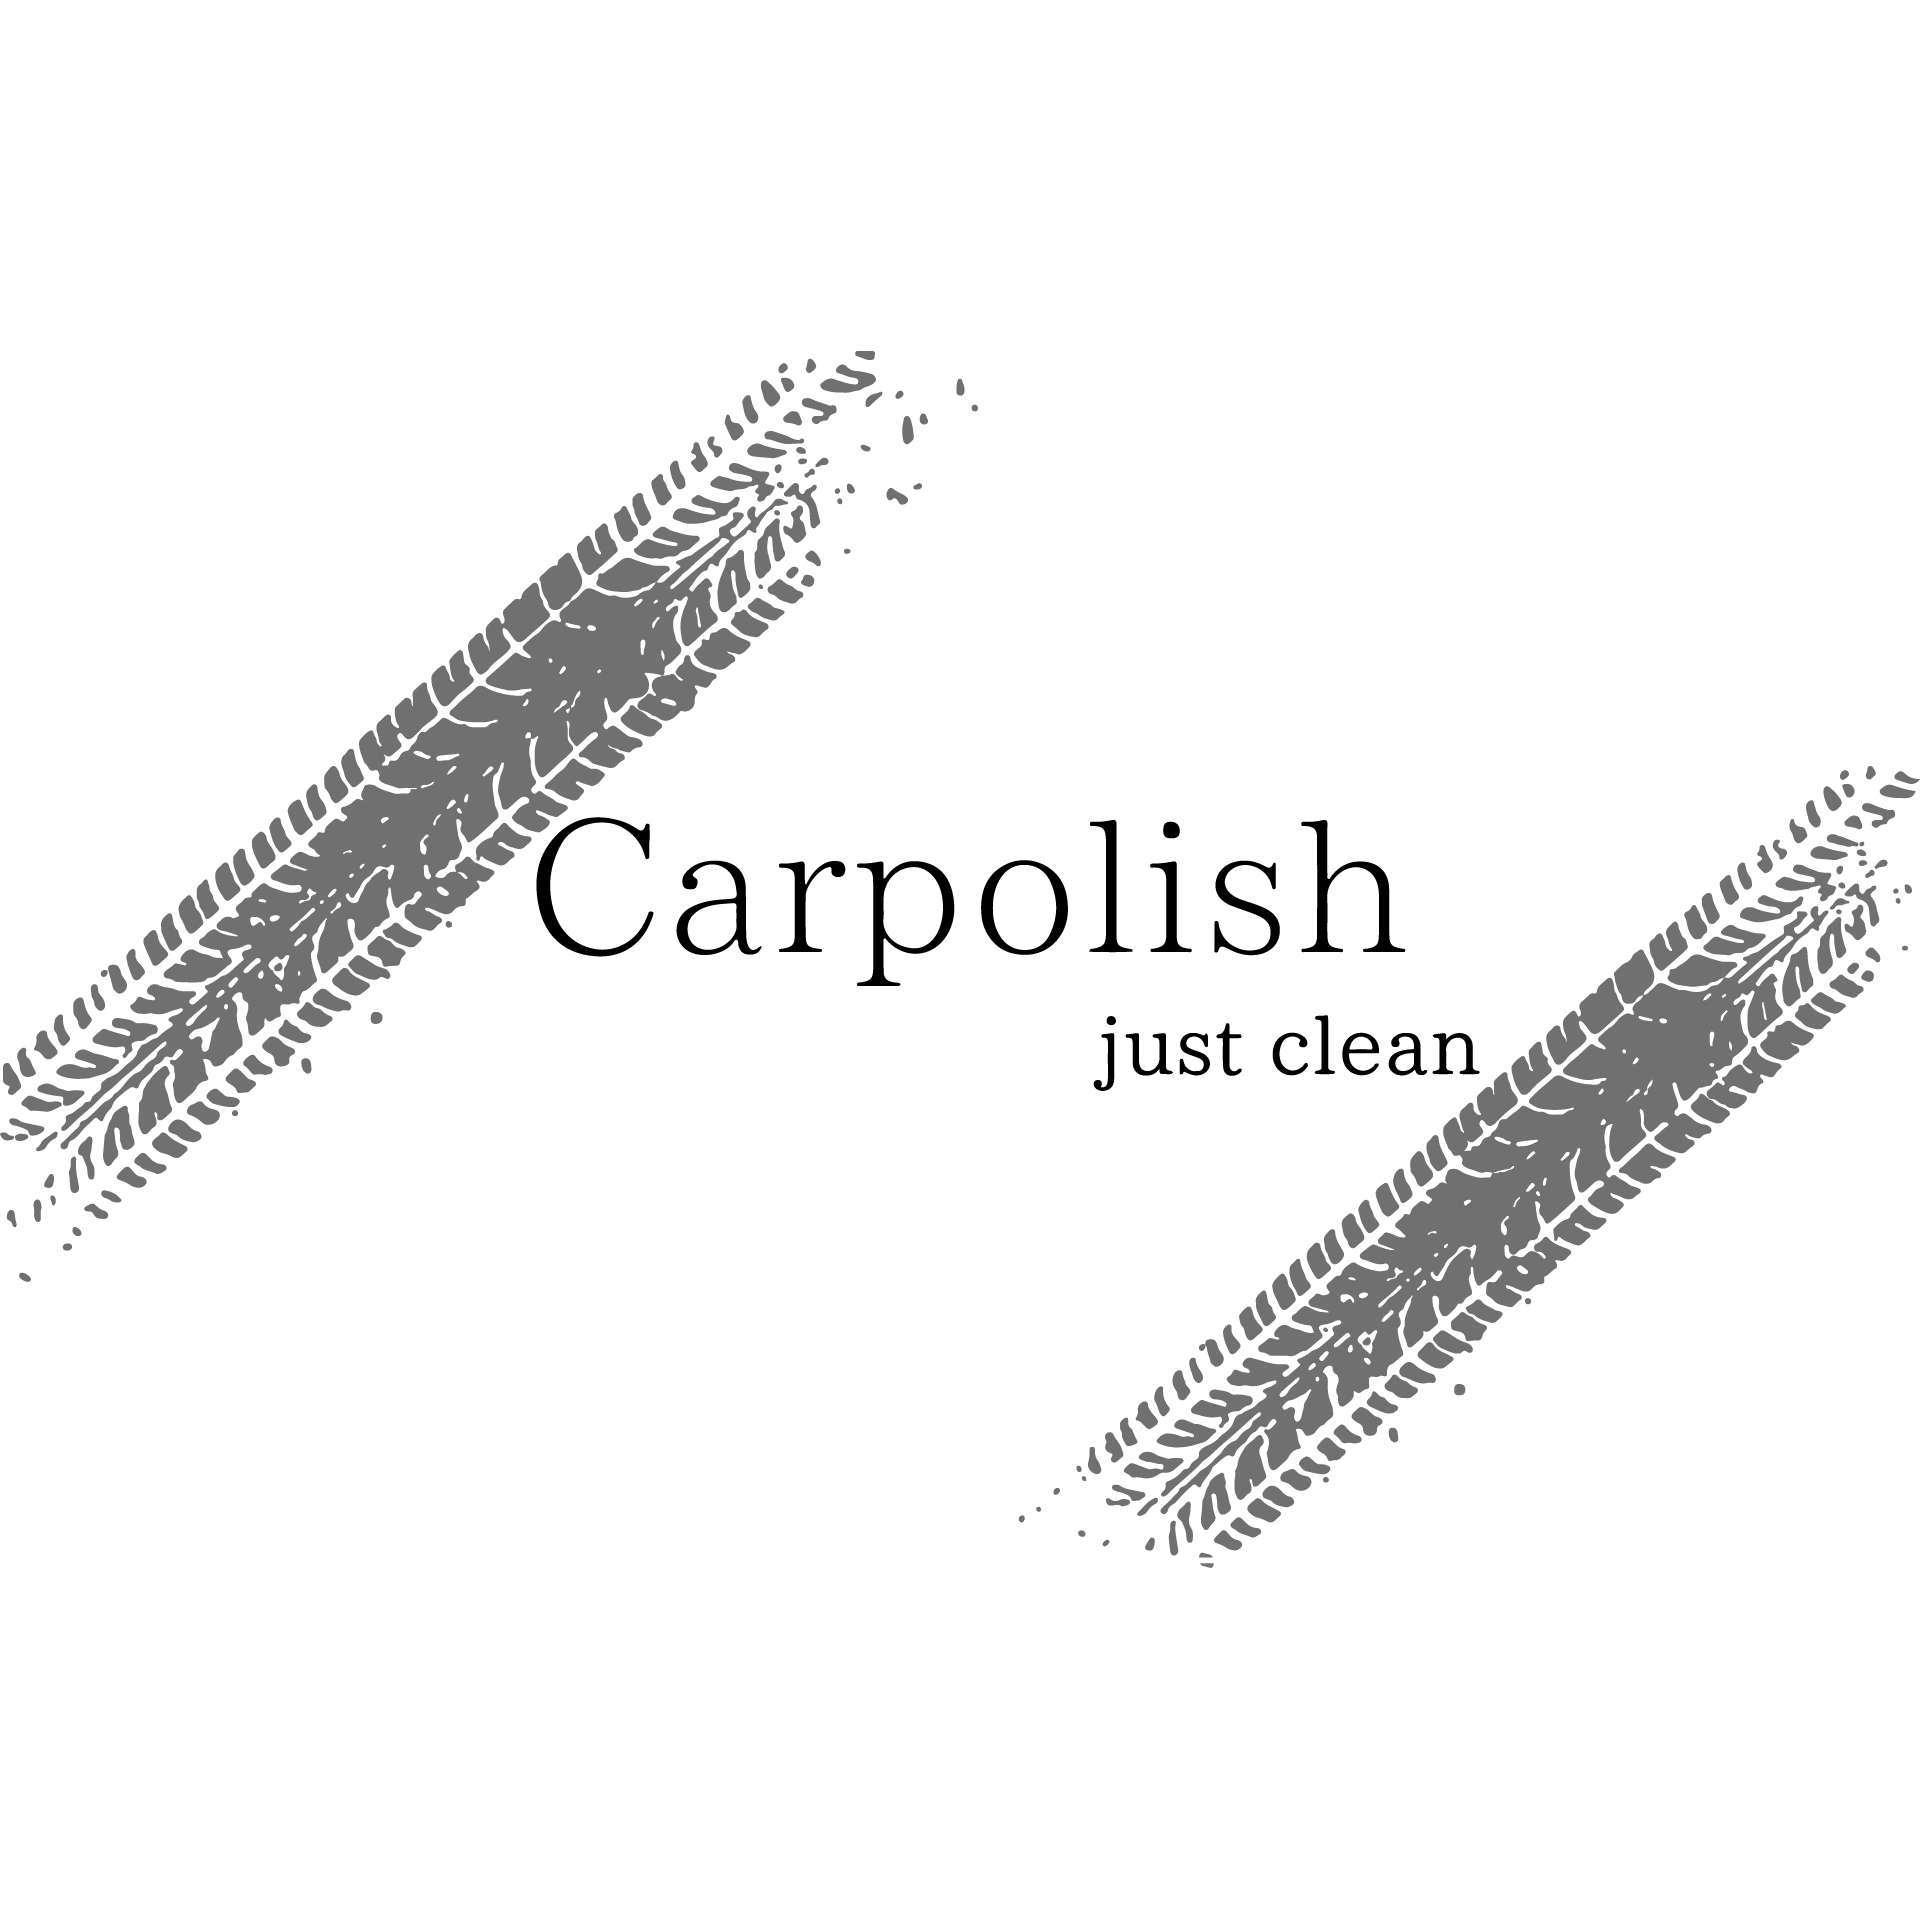 Carpolish just clean Logo